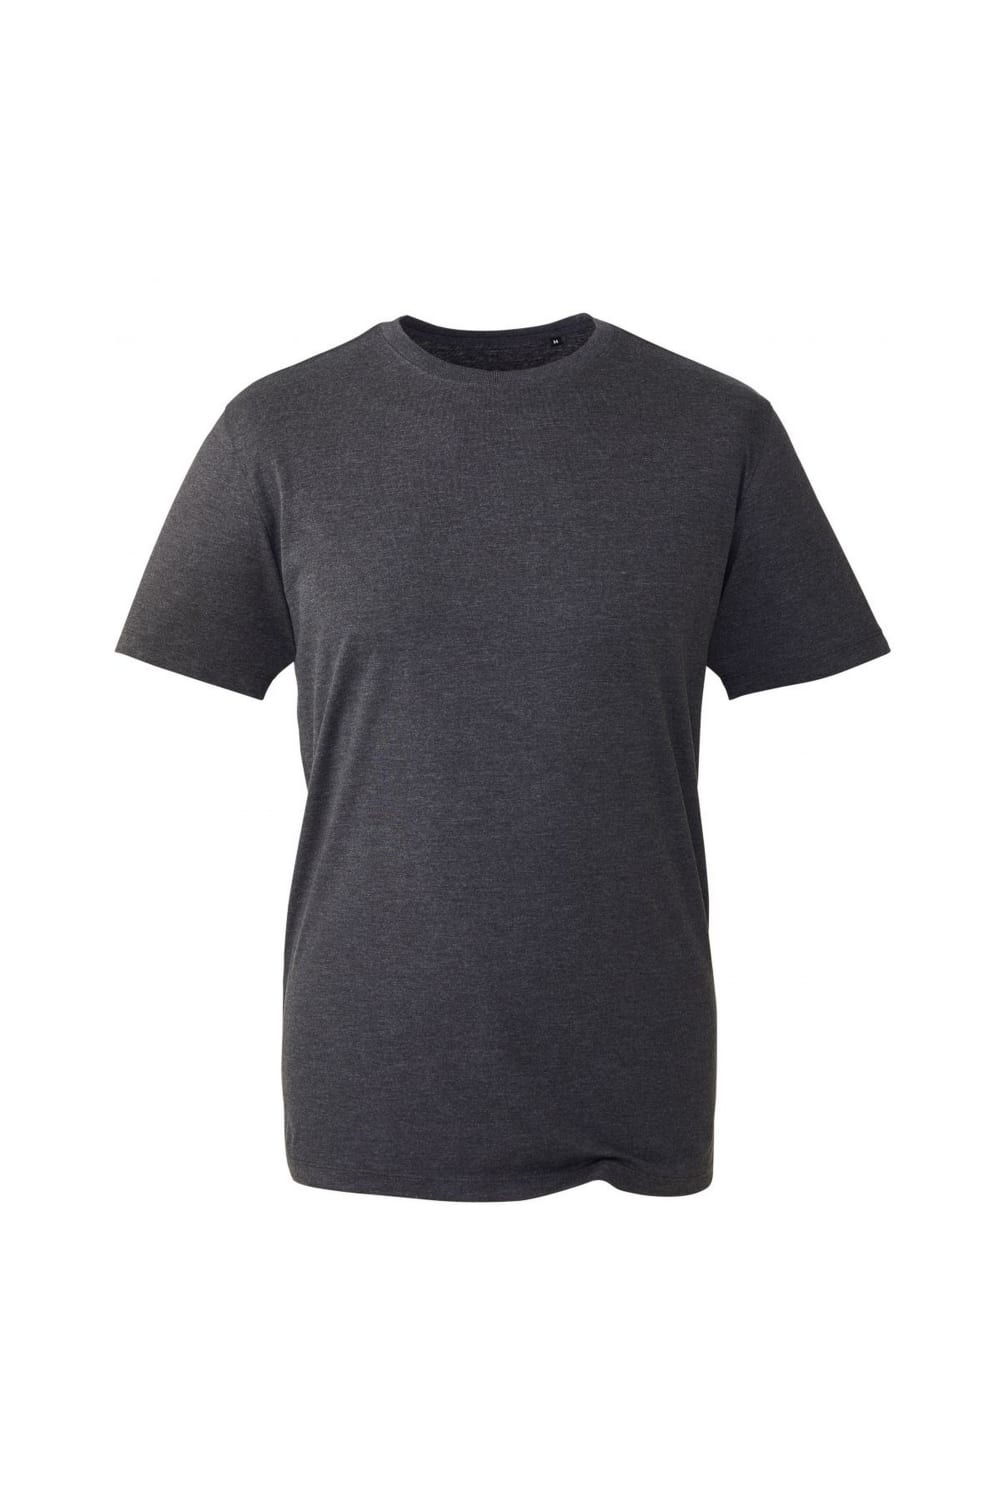 Anthem Mens Short Sleeve T-Shirt (Dark Gray Marl)